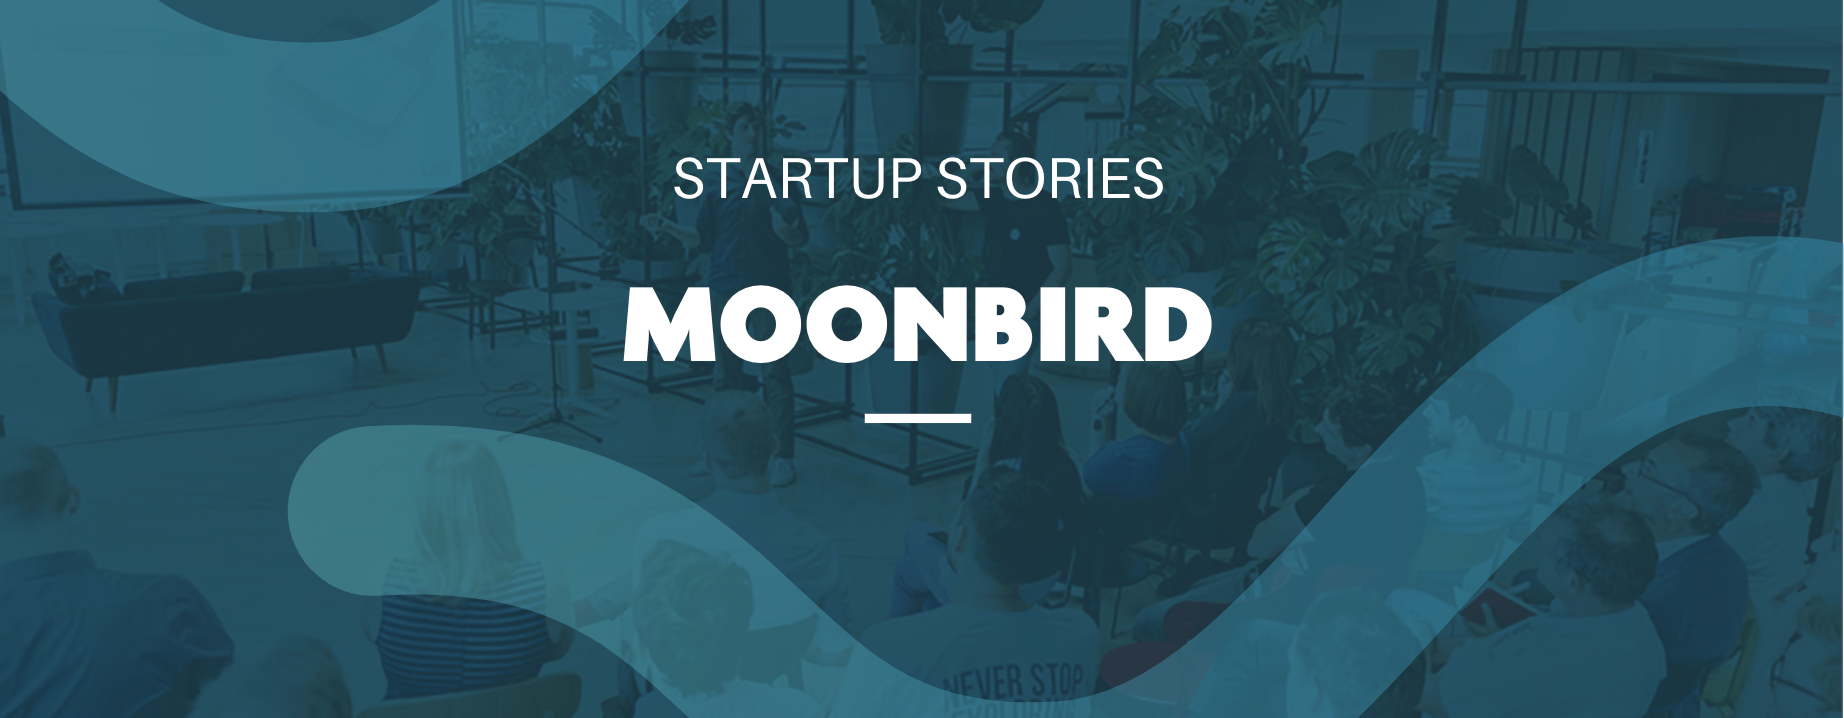 Startup stories Moonbird